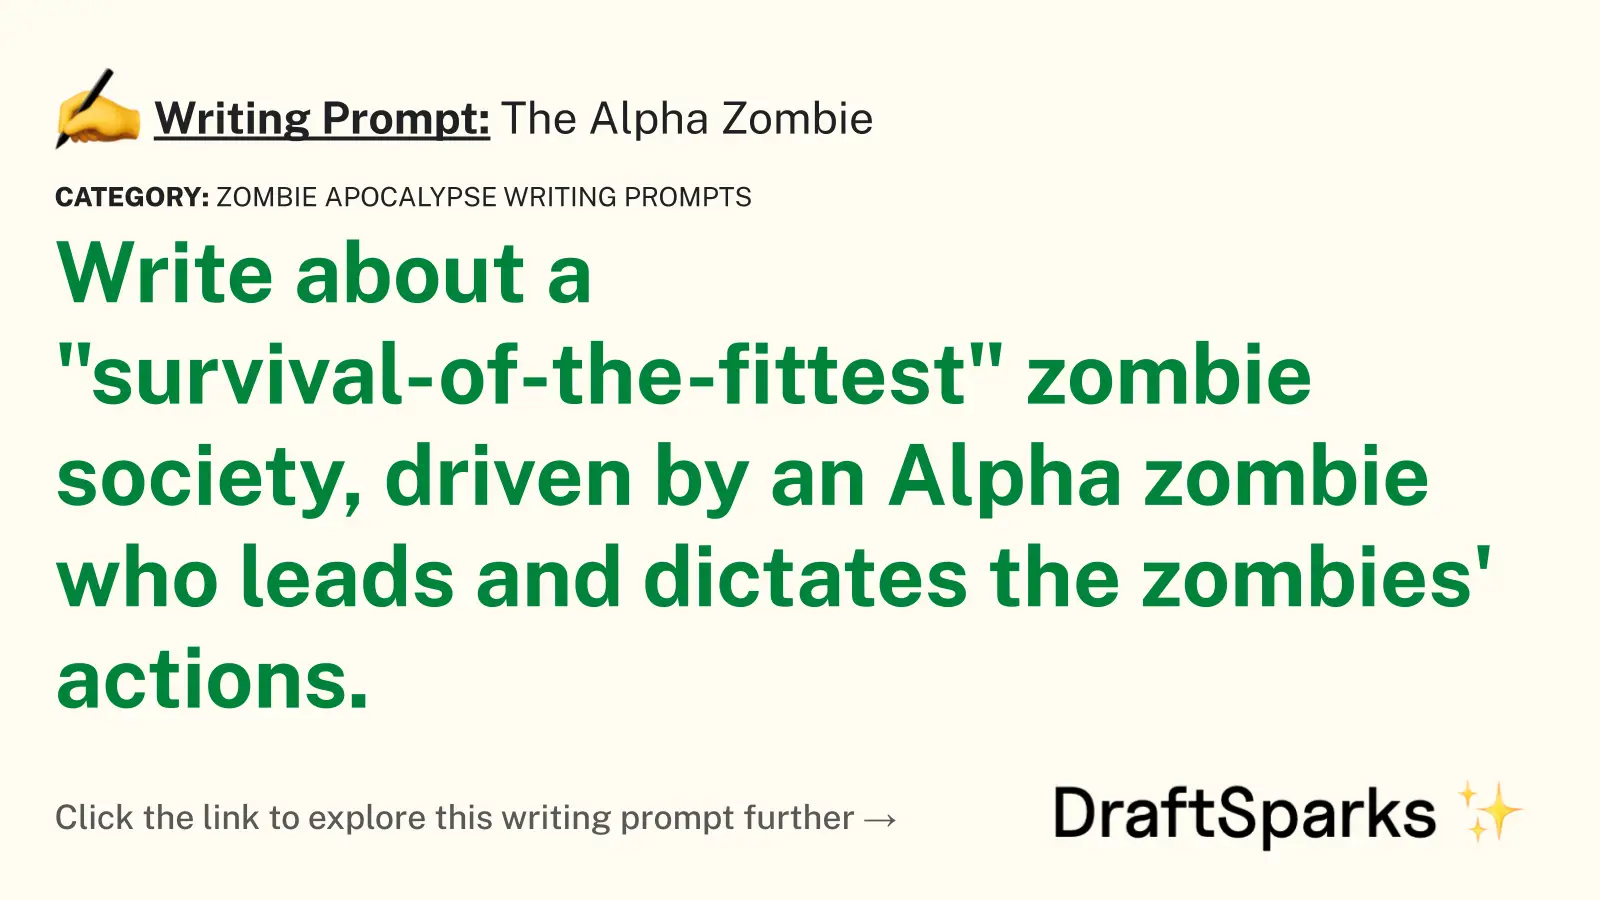 The Alpha Zombie